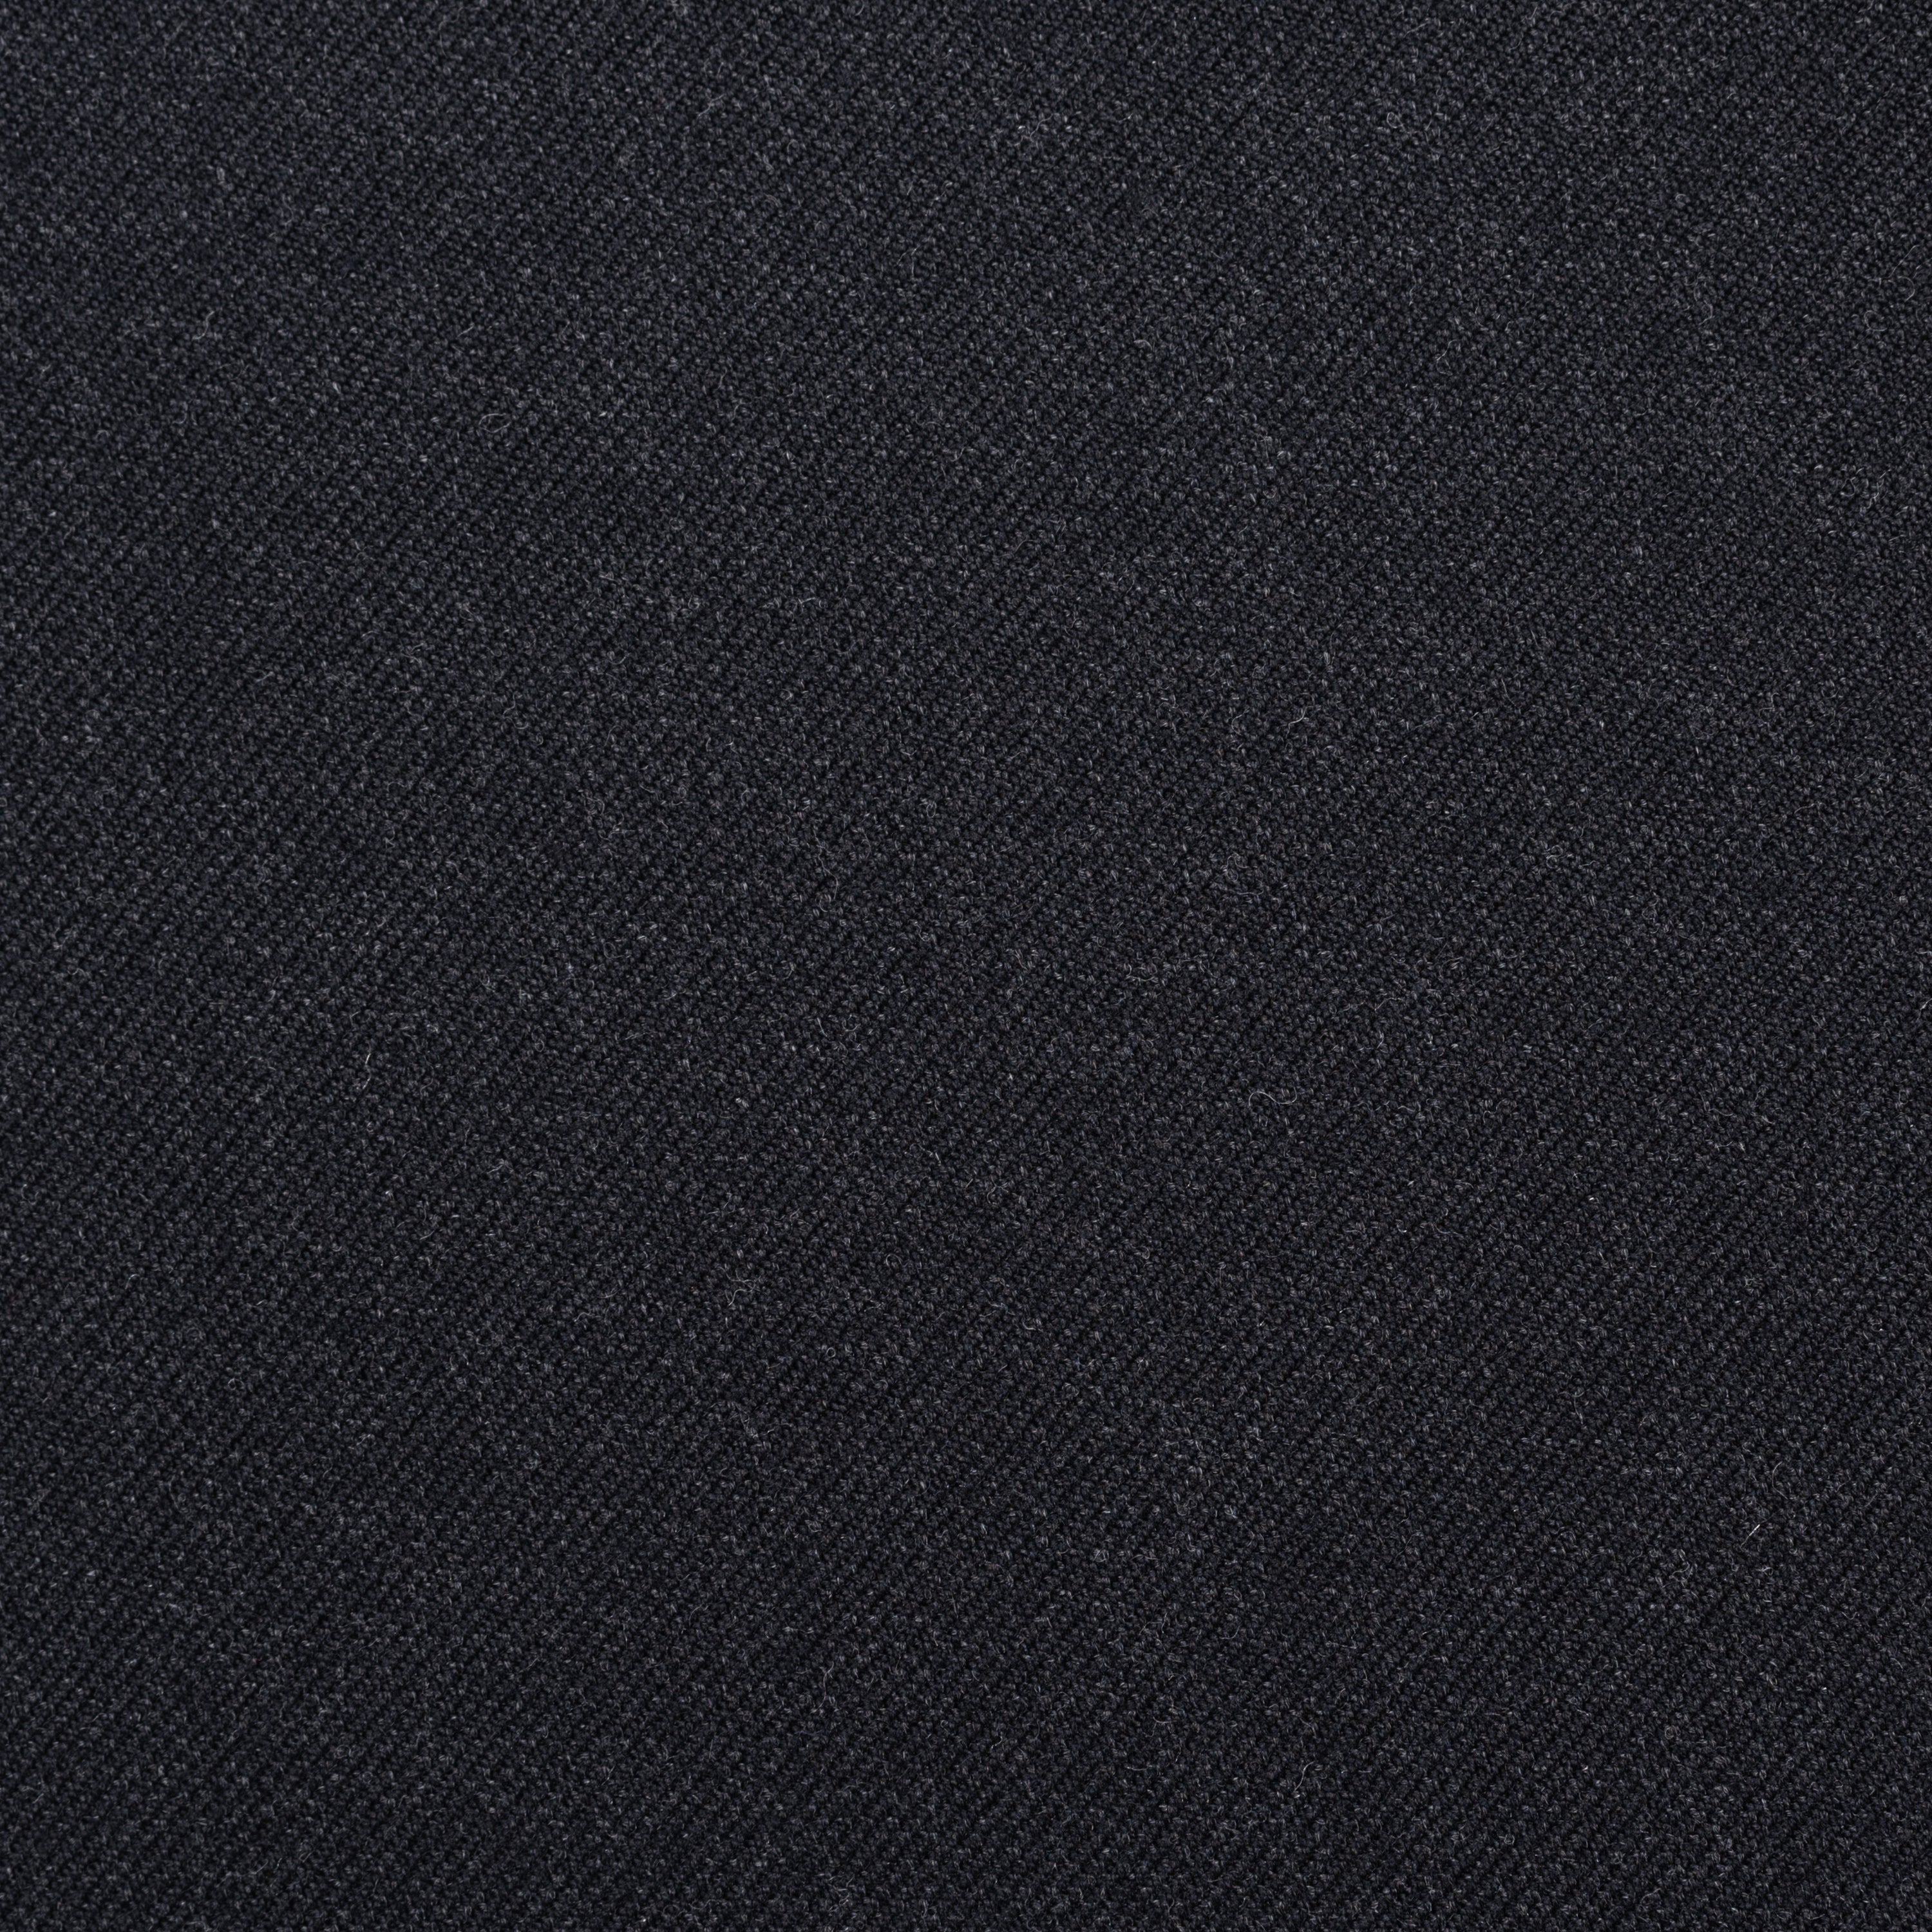 CASTANGIA 1850 Charcoal Gray Wool-Cashmere Jacket EU 54 NEW US 44 CASTANGIA